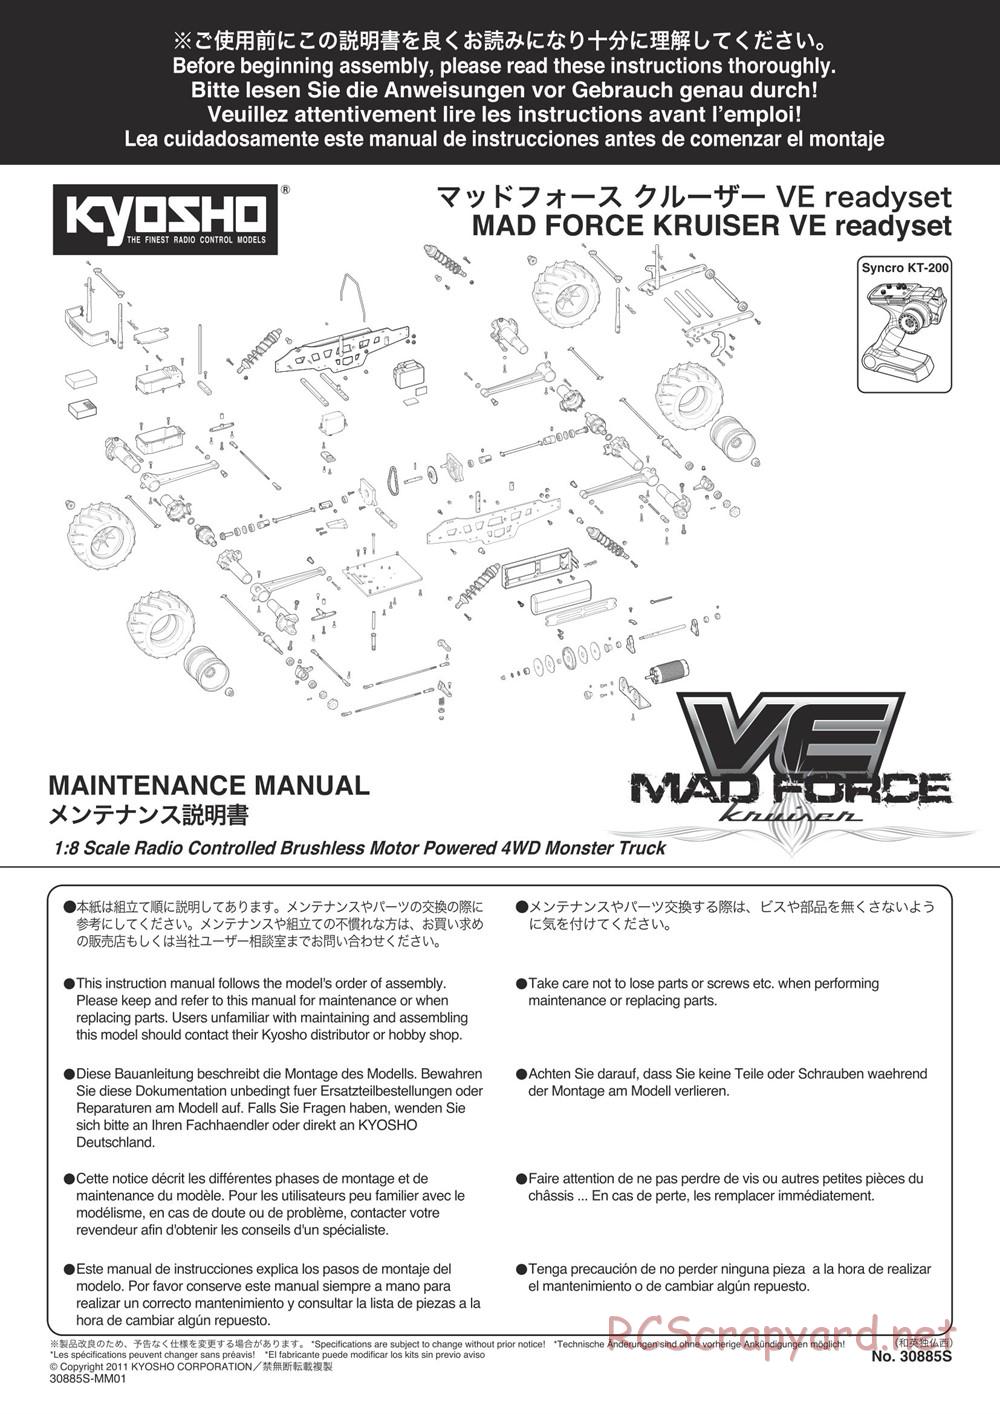 Kyosho - Mad Force Kruiser VE - Manual - Page 1